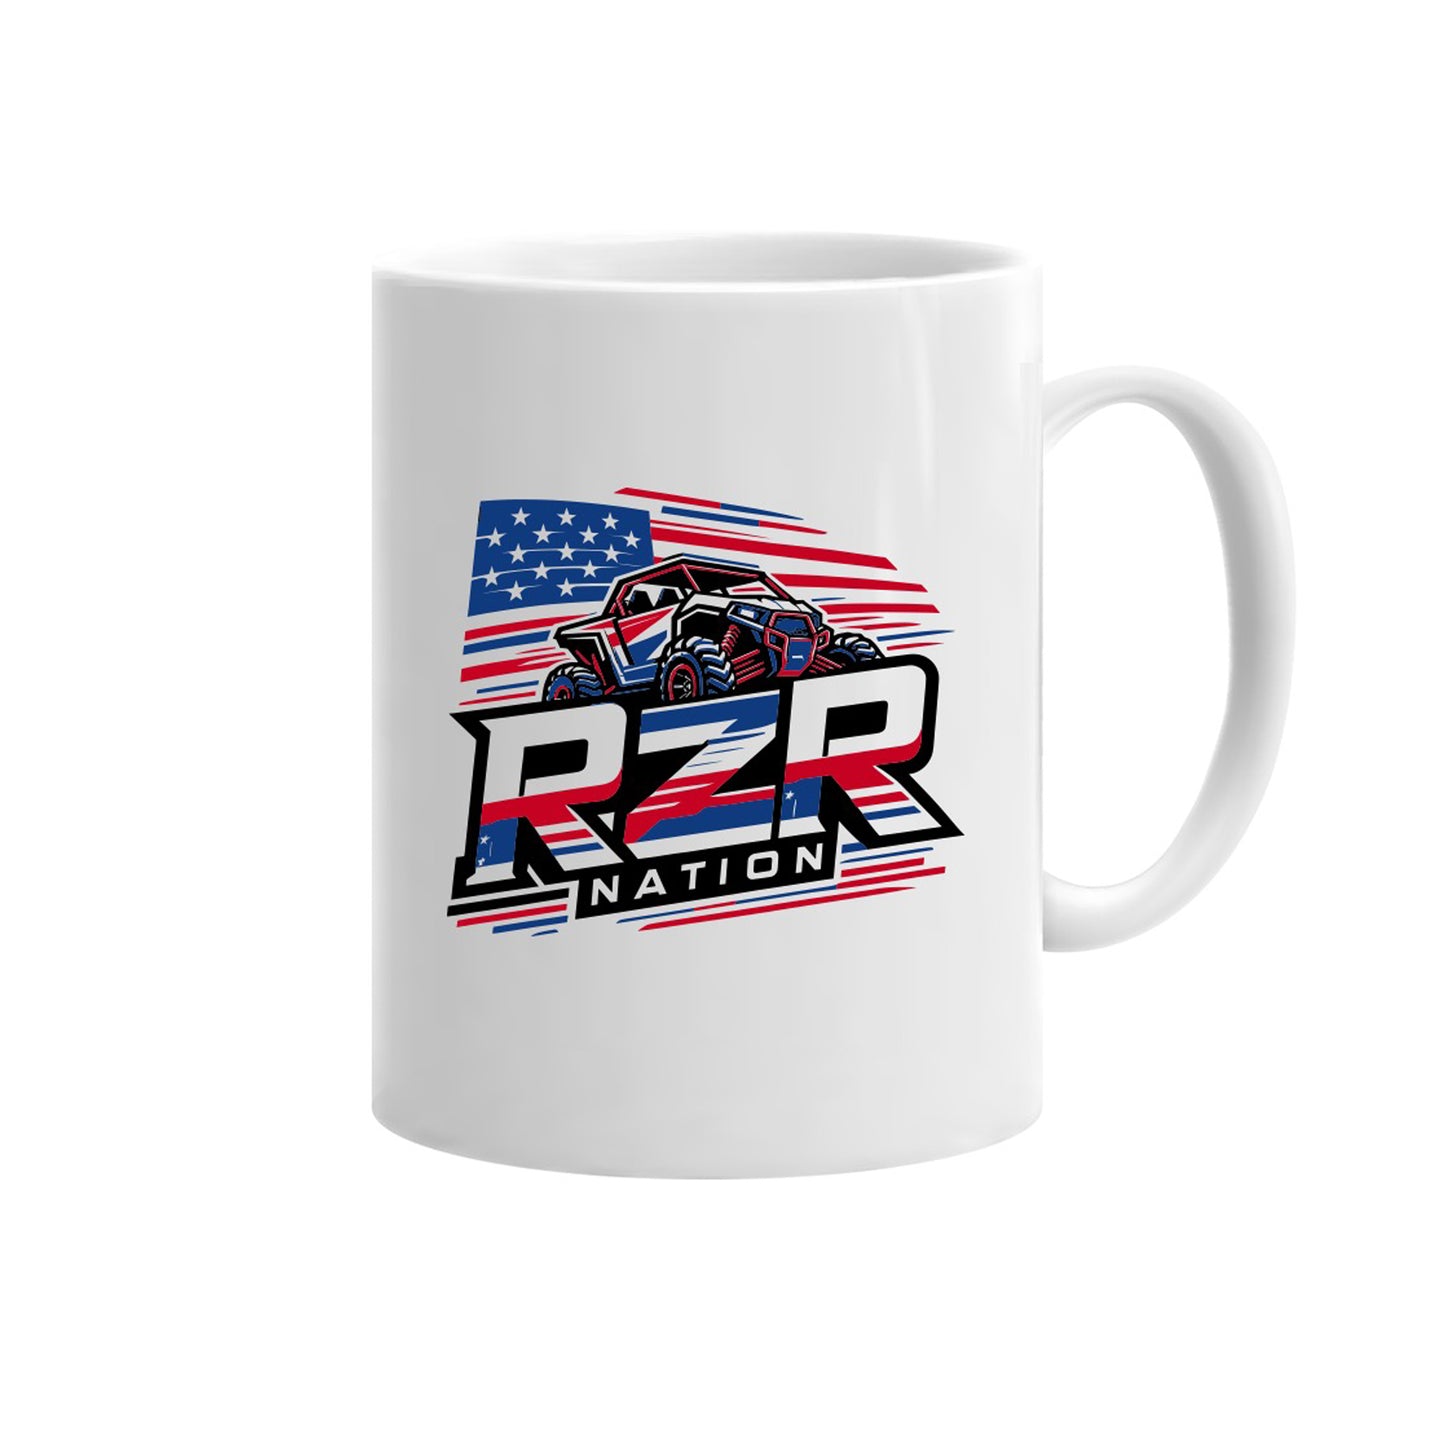 RZR Nation Coffee Mug, Ceramic, 15 oz.